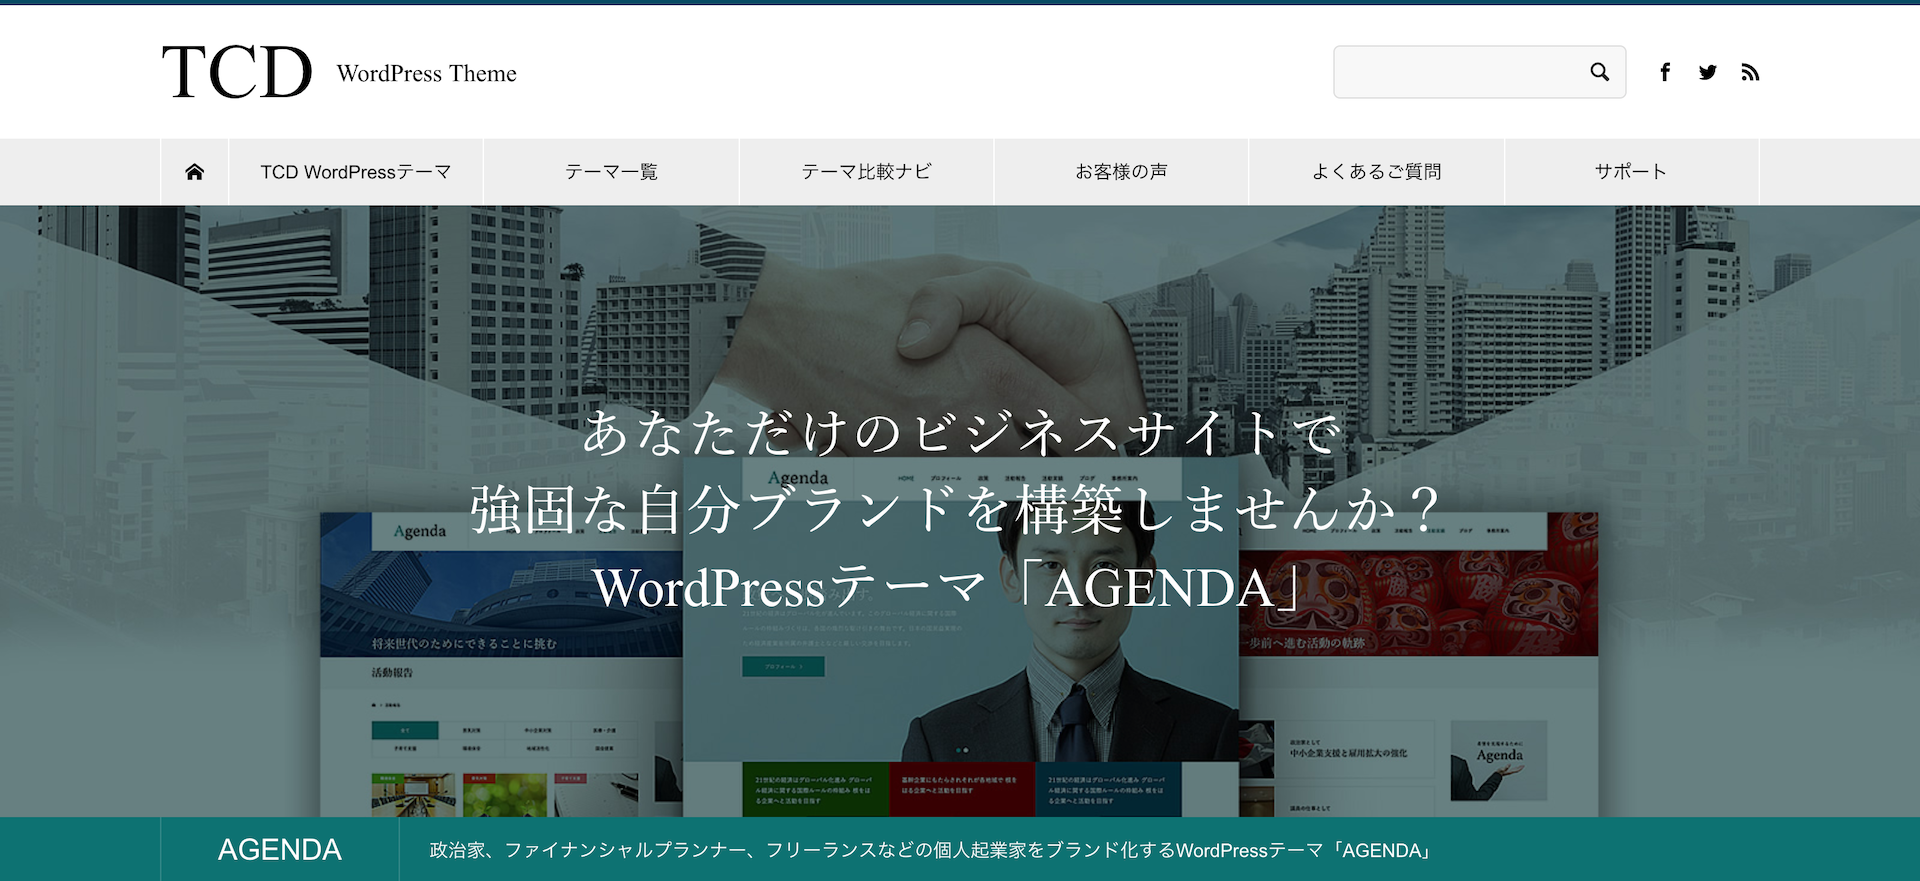 TCD WordPress テーマ